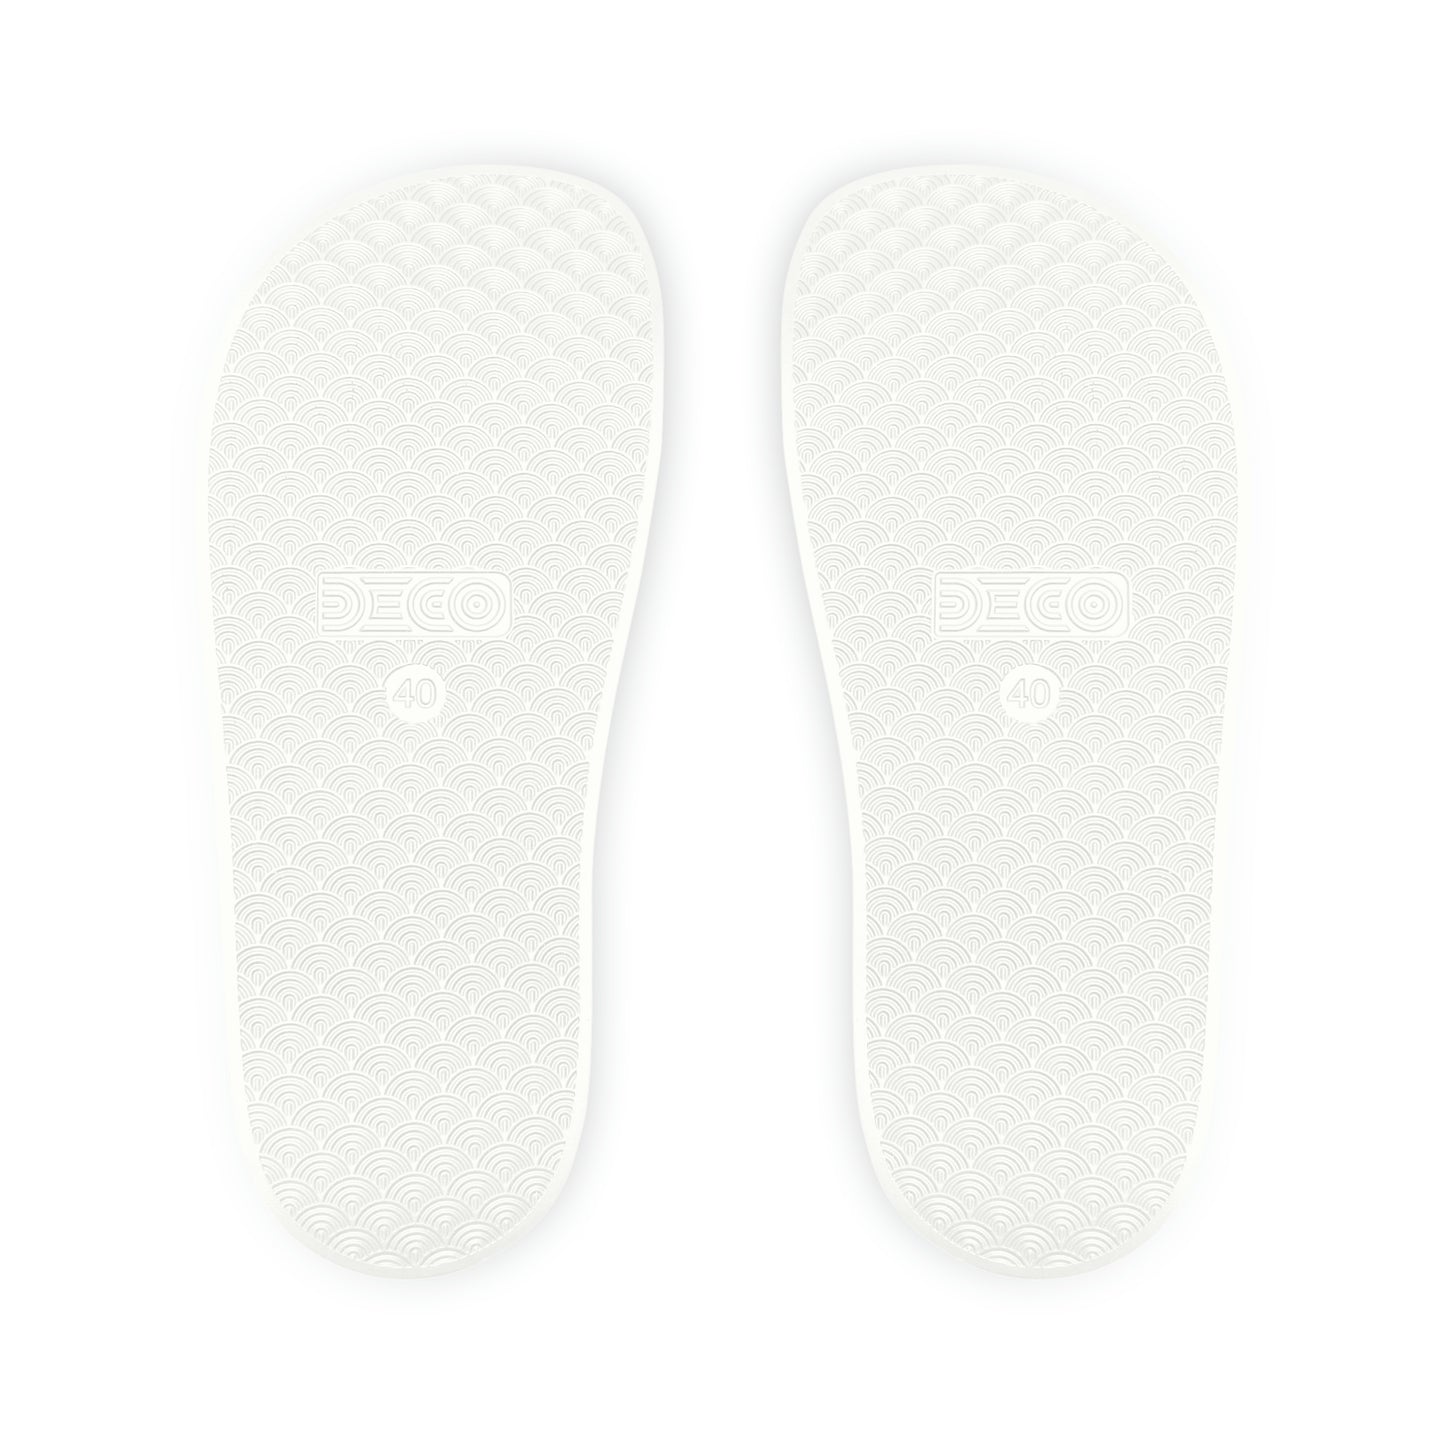 STILLGETPAID APPAREL Men's PU Slide Sandals